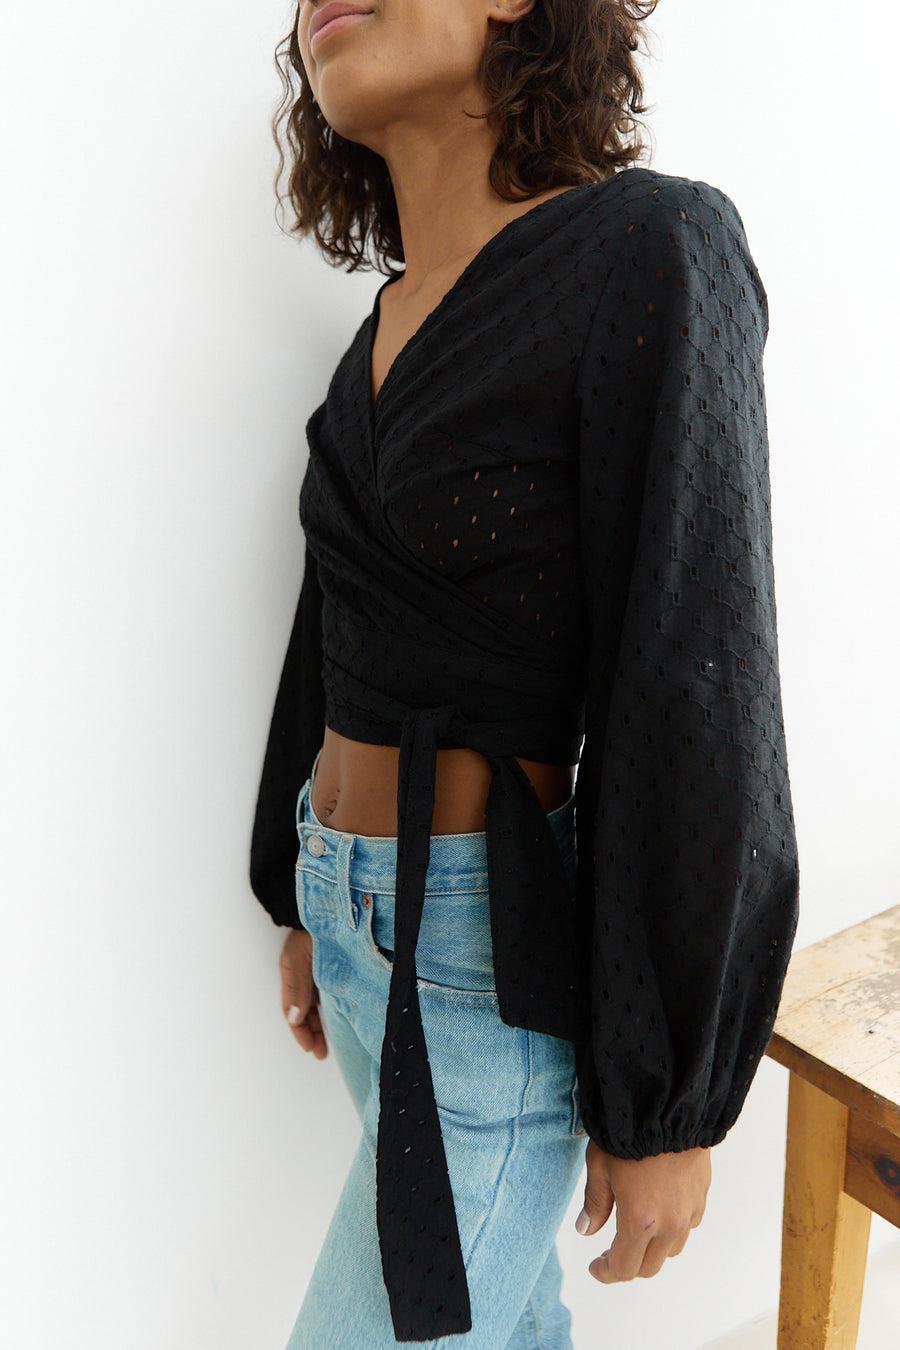 Meij-Katja Wrap Blouse (black embroidery), puffy sleeves, wrap details